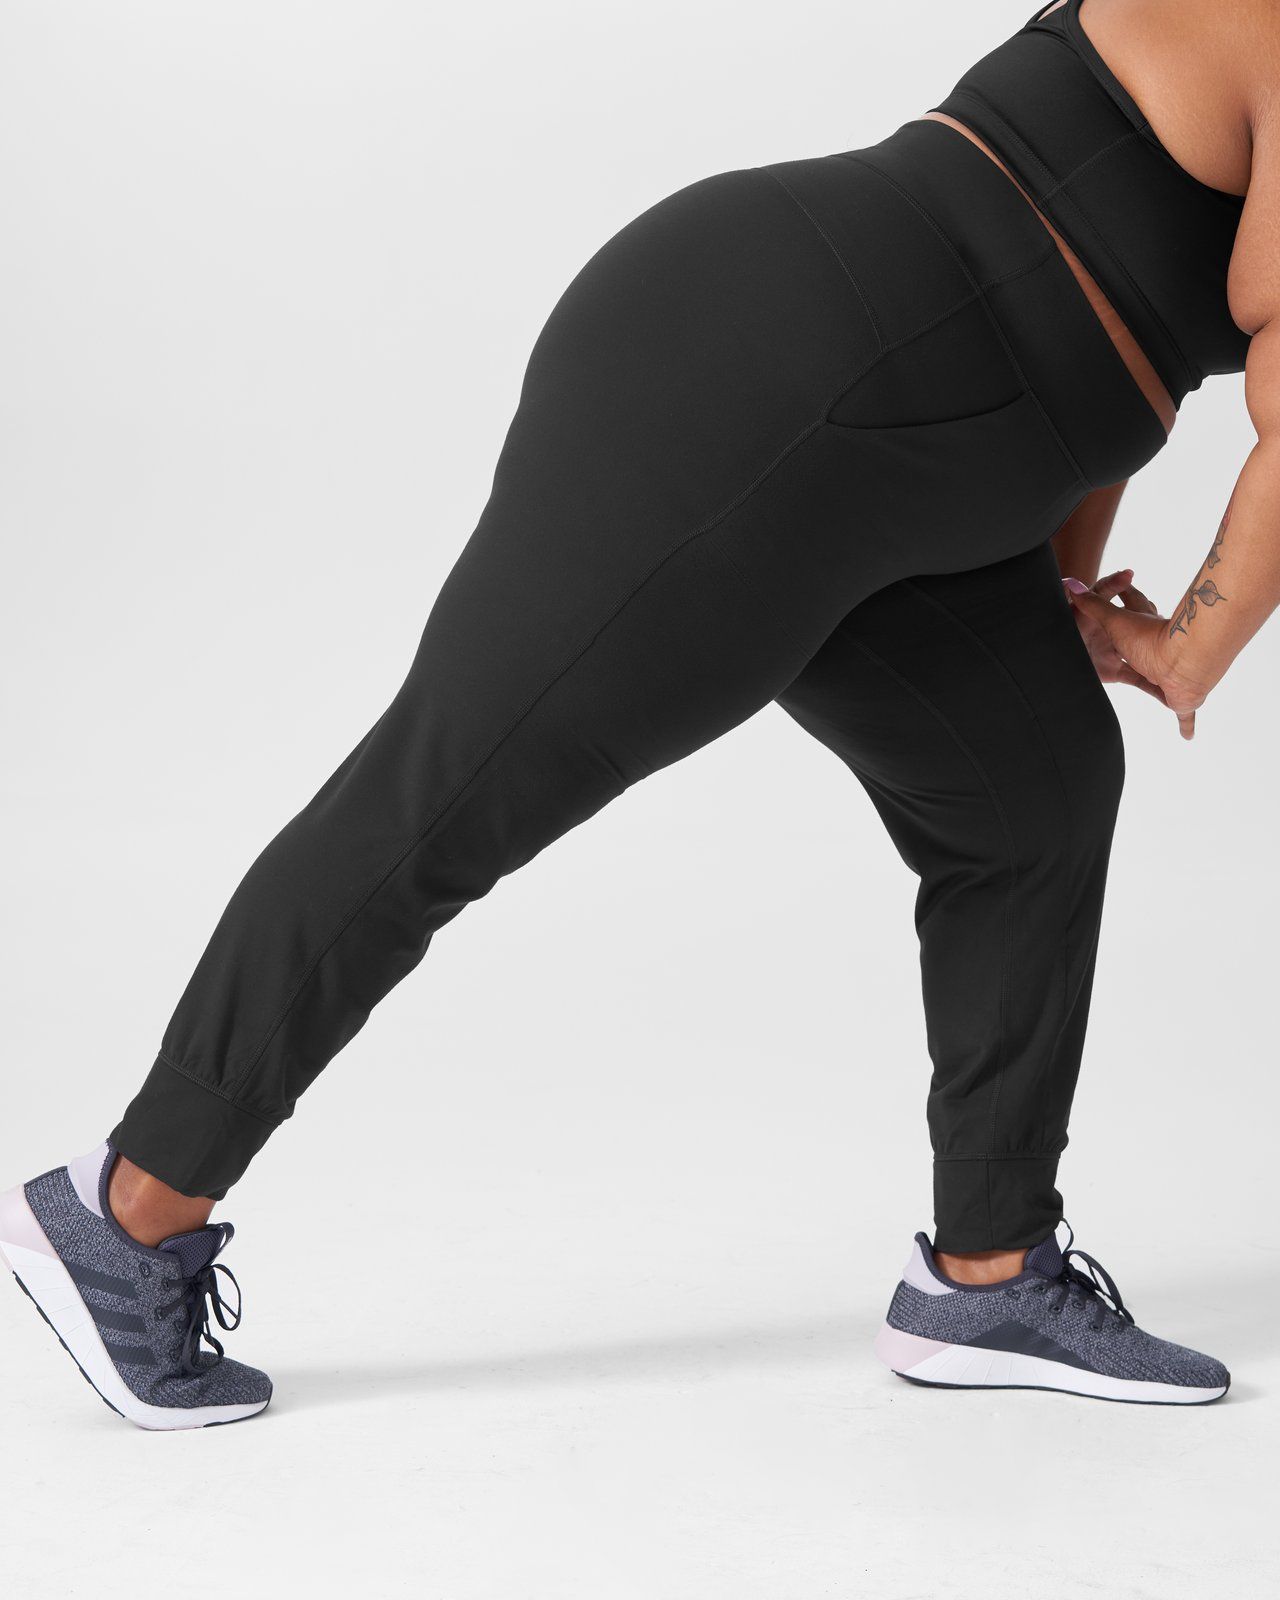 Limsea Women Sport Yoga Print Workout Mid Waist Plus Size Running Pants Bootcut Fitness Elastic Leggings 